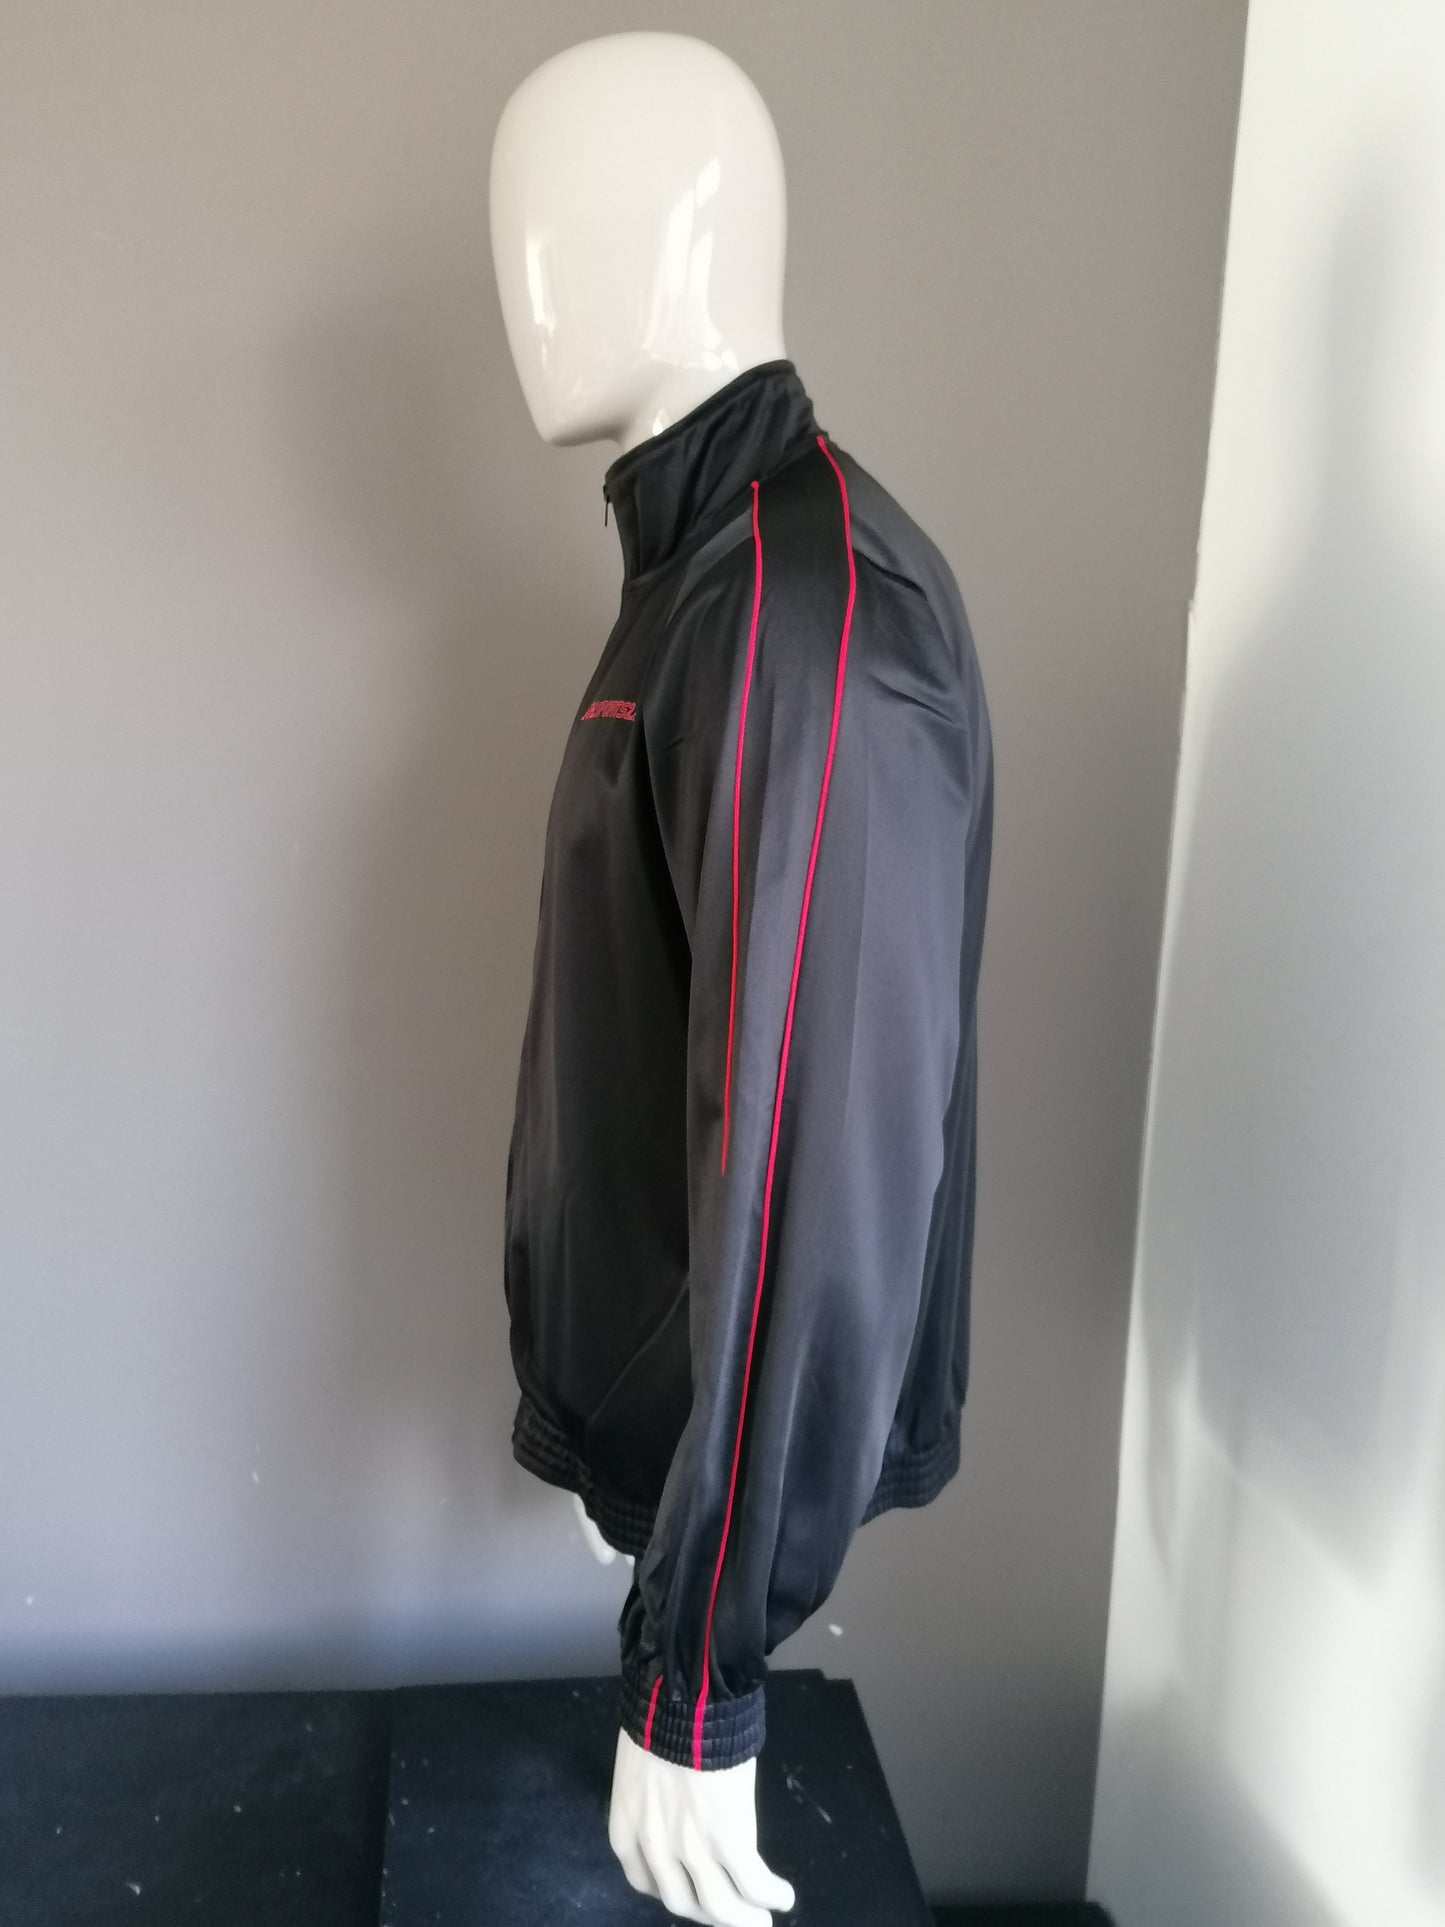 Im Obergeschoss Sport Trainingsjacke. Schwarz rot gefärbt. Größe L.